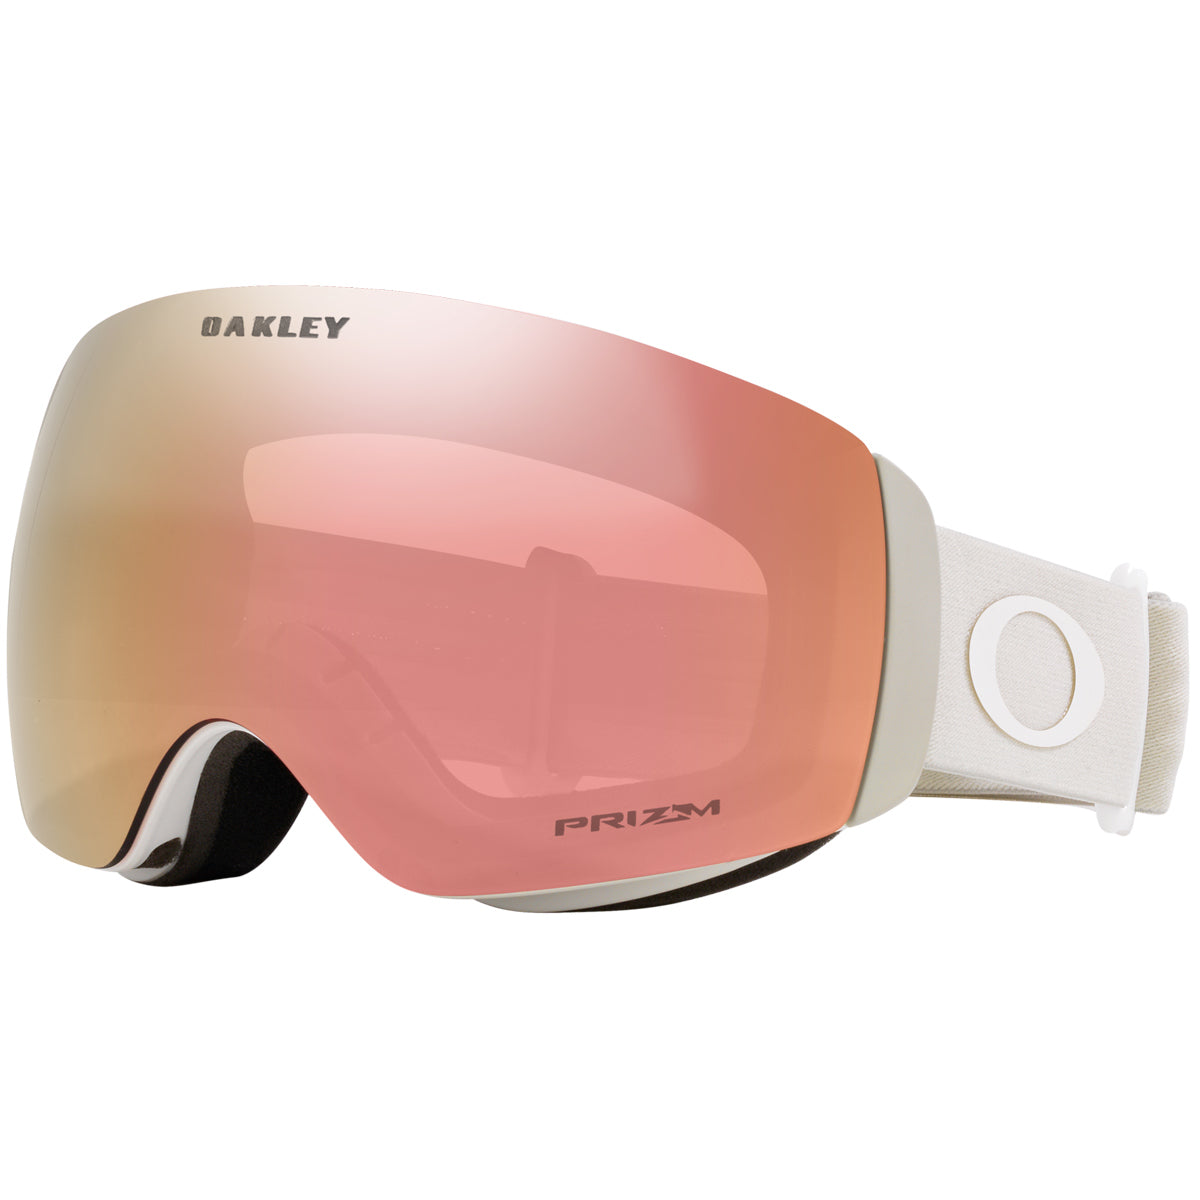 Oakley Flight Deck Snowboard Goggles - Matte Cool Grey/Prizm Rose Gold Iridium image 1